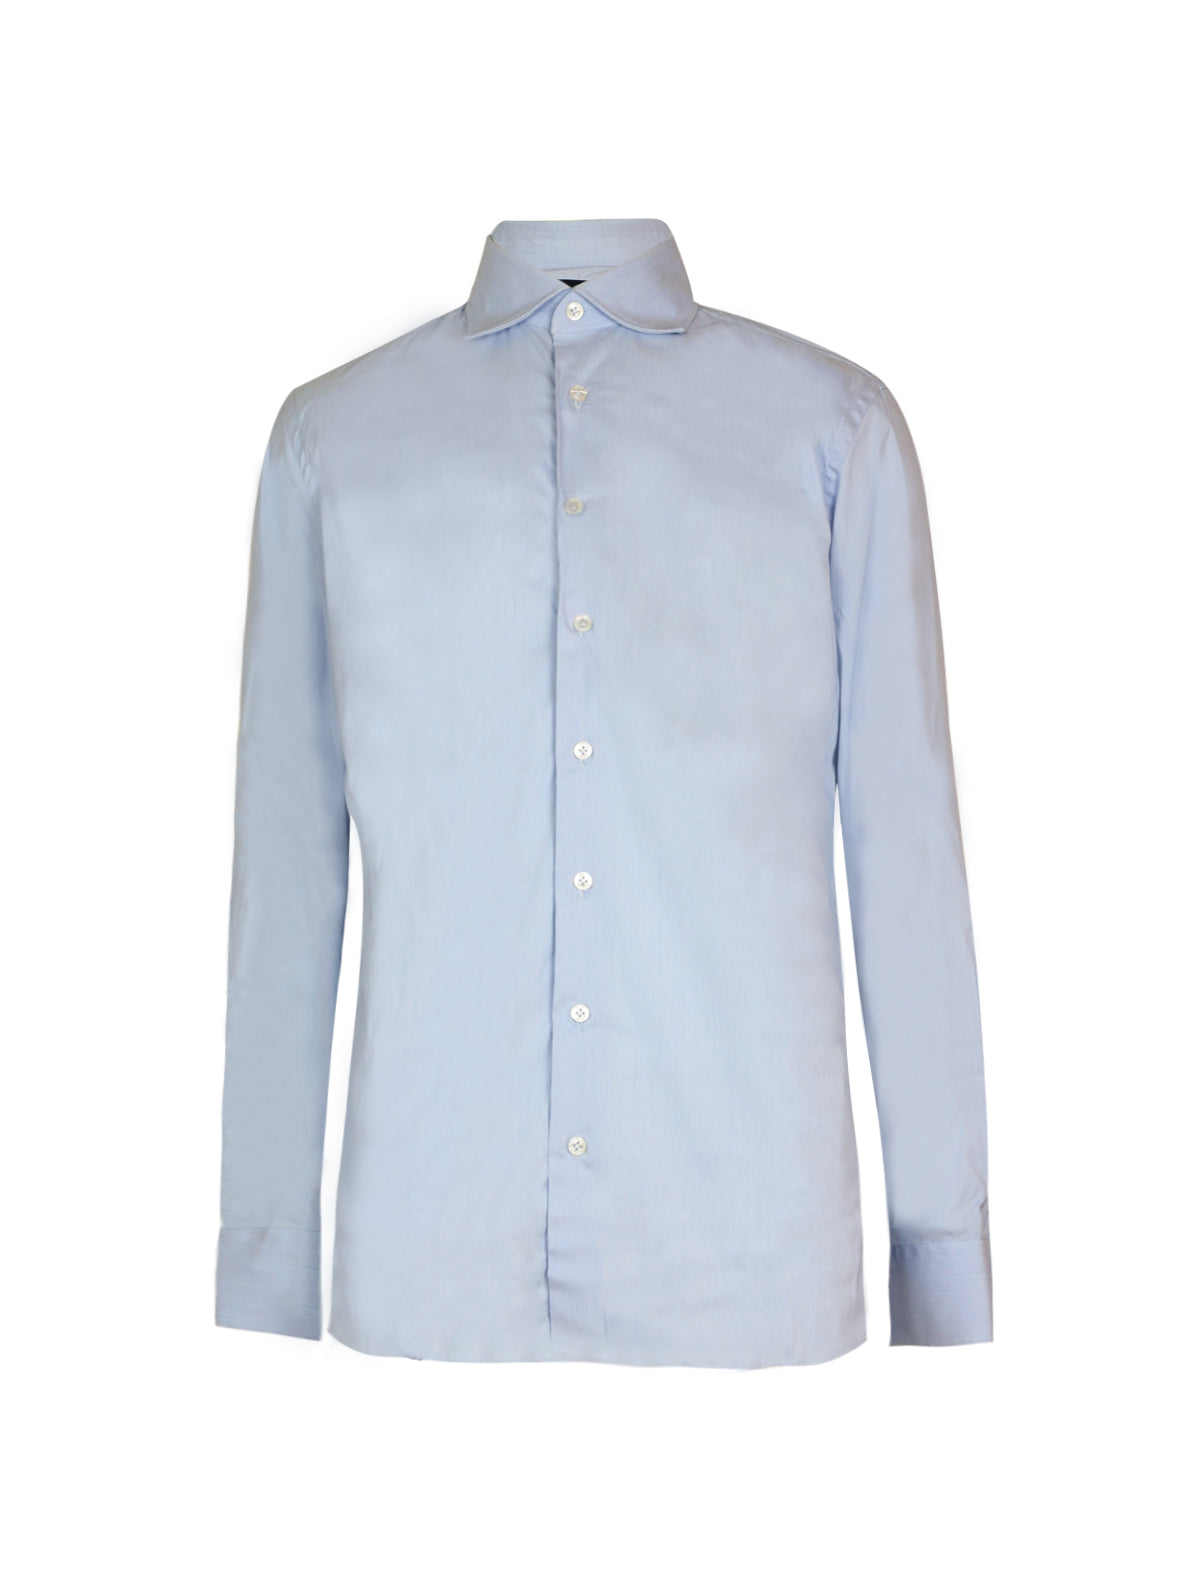 Lardini Cotton-Blend Shirt in Cornflower Blue